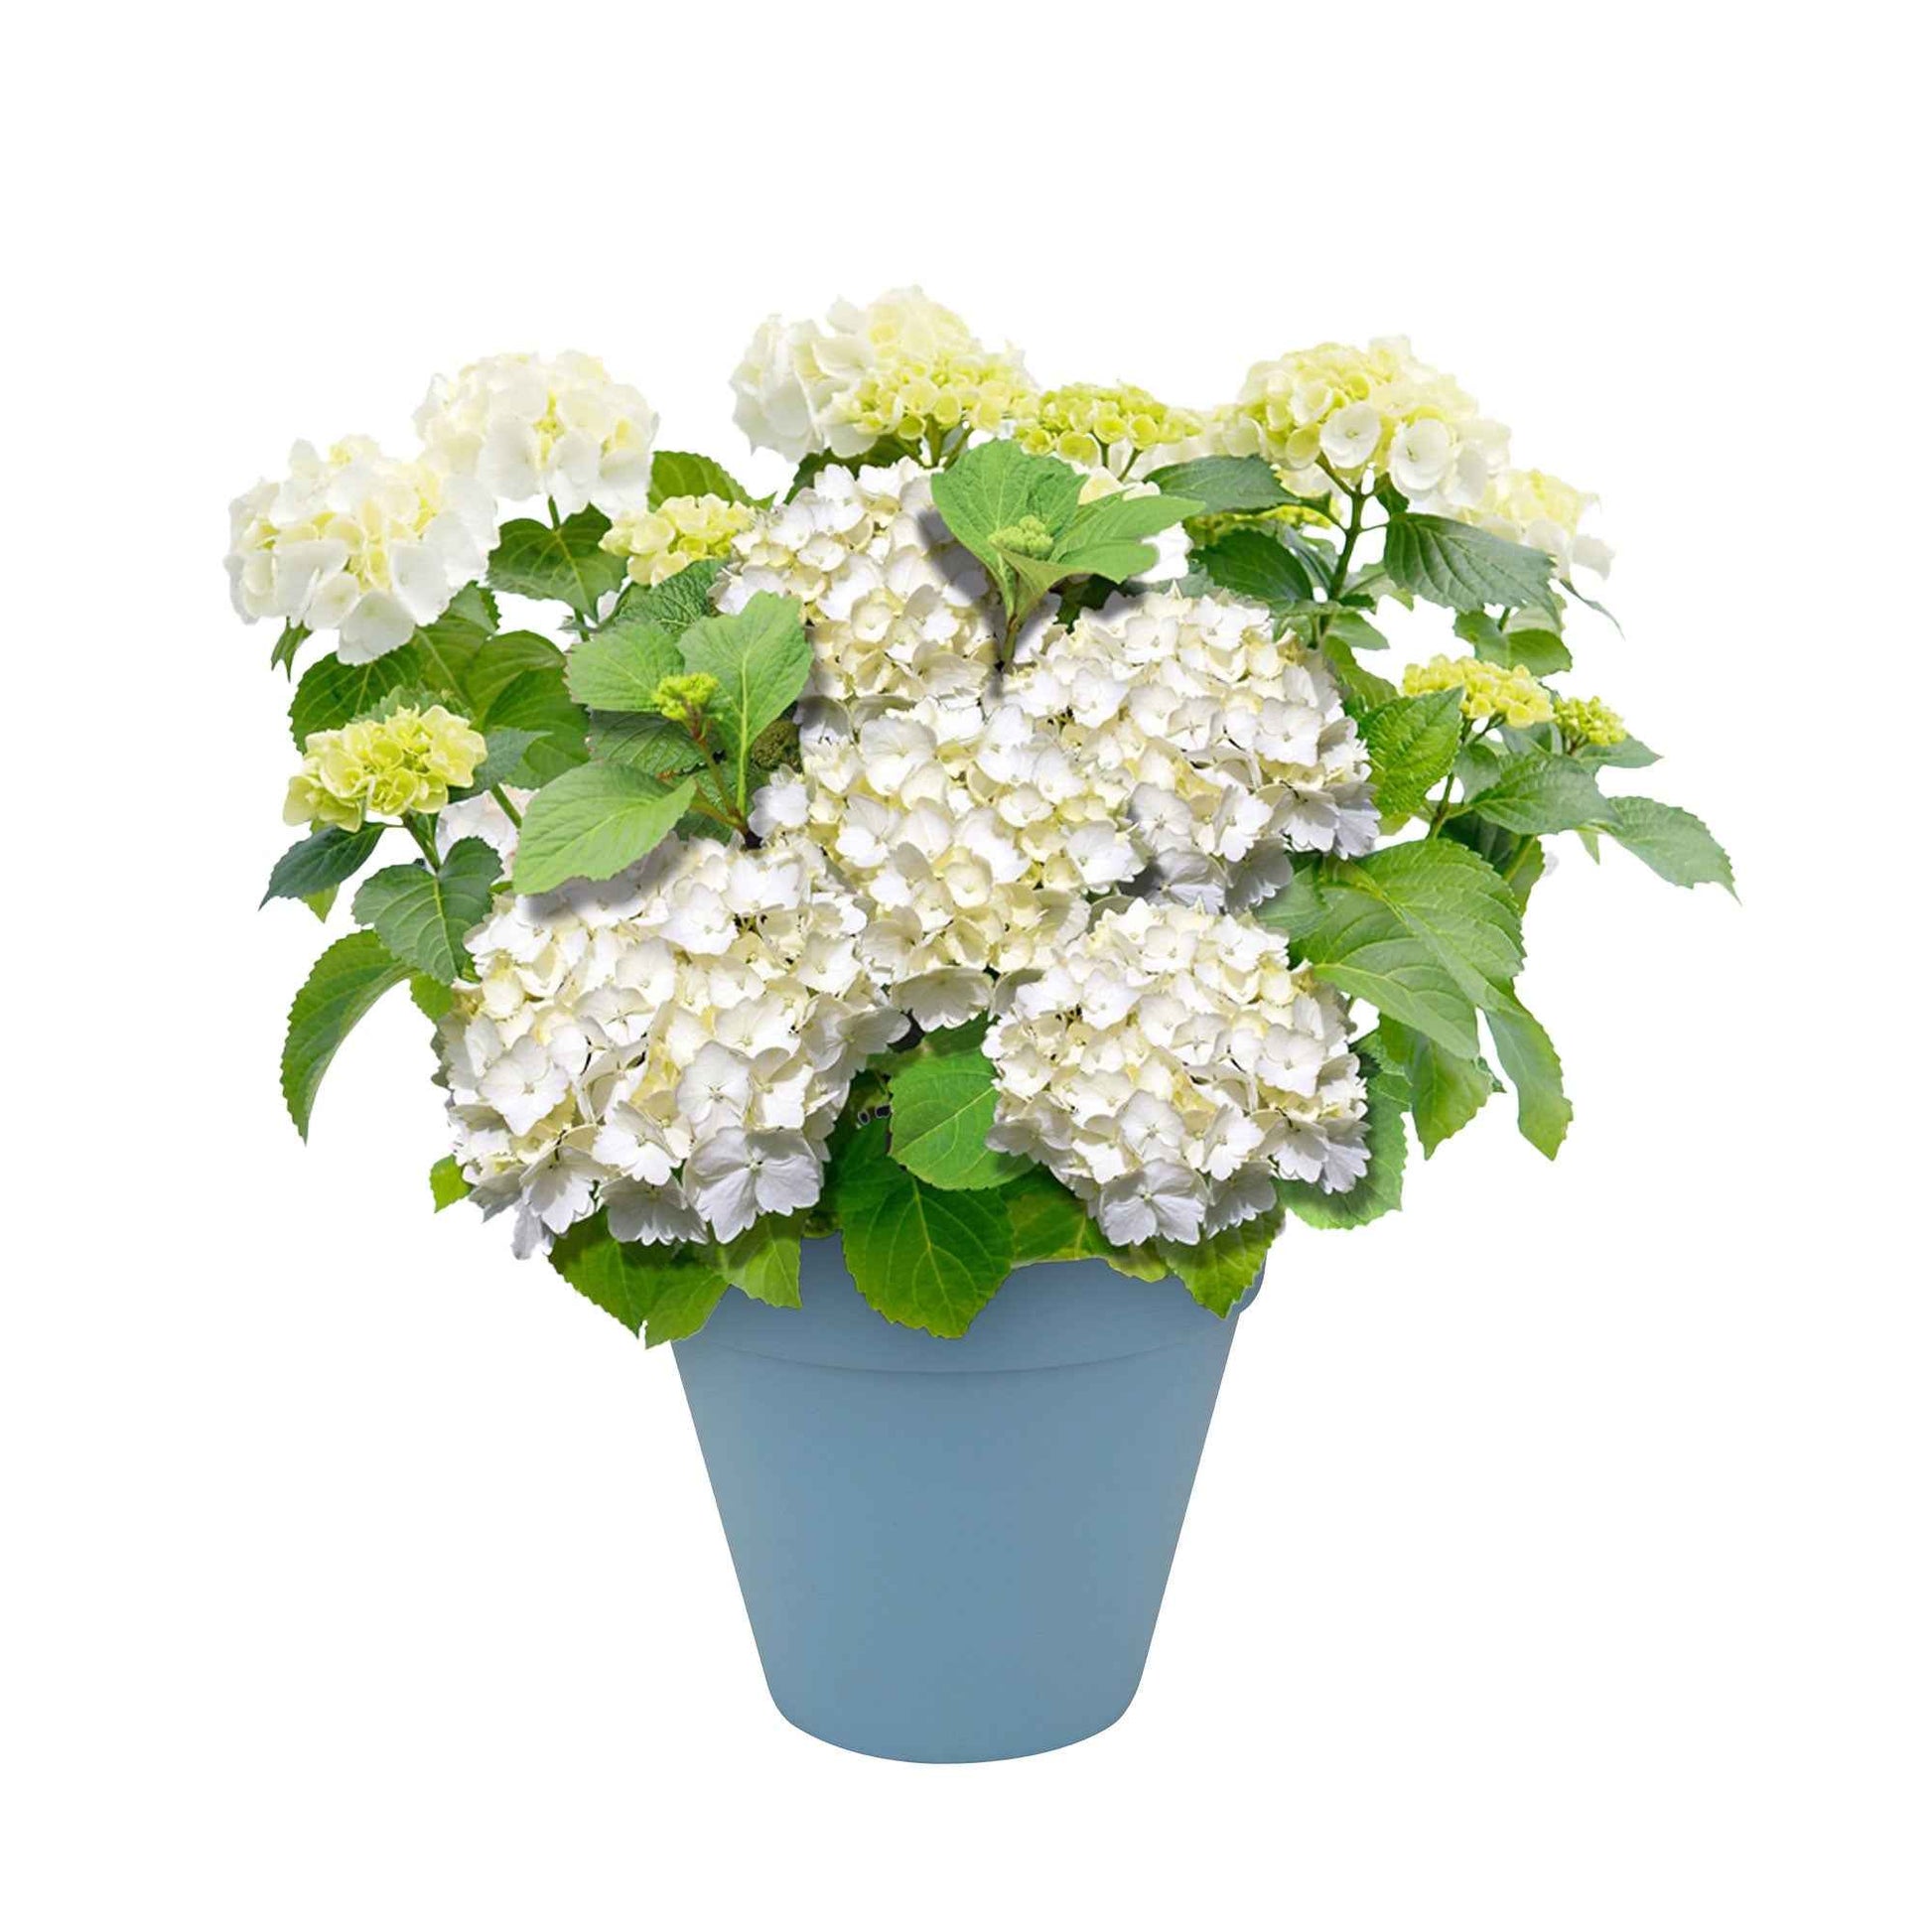 Hortensia blanc 'Forever & Ever' avec pot décoratif bleu - Arbustes fleuris